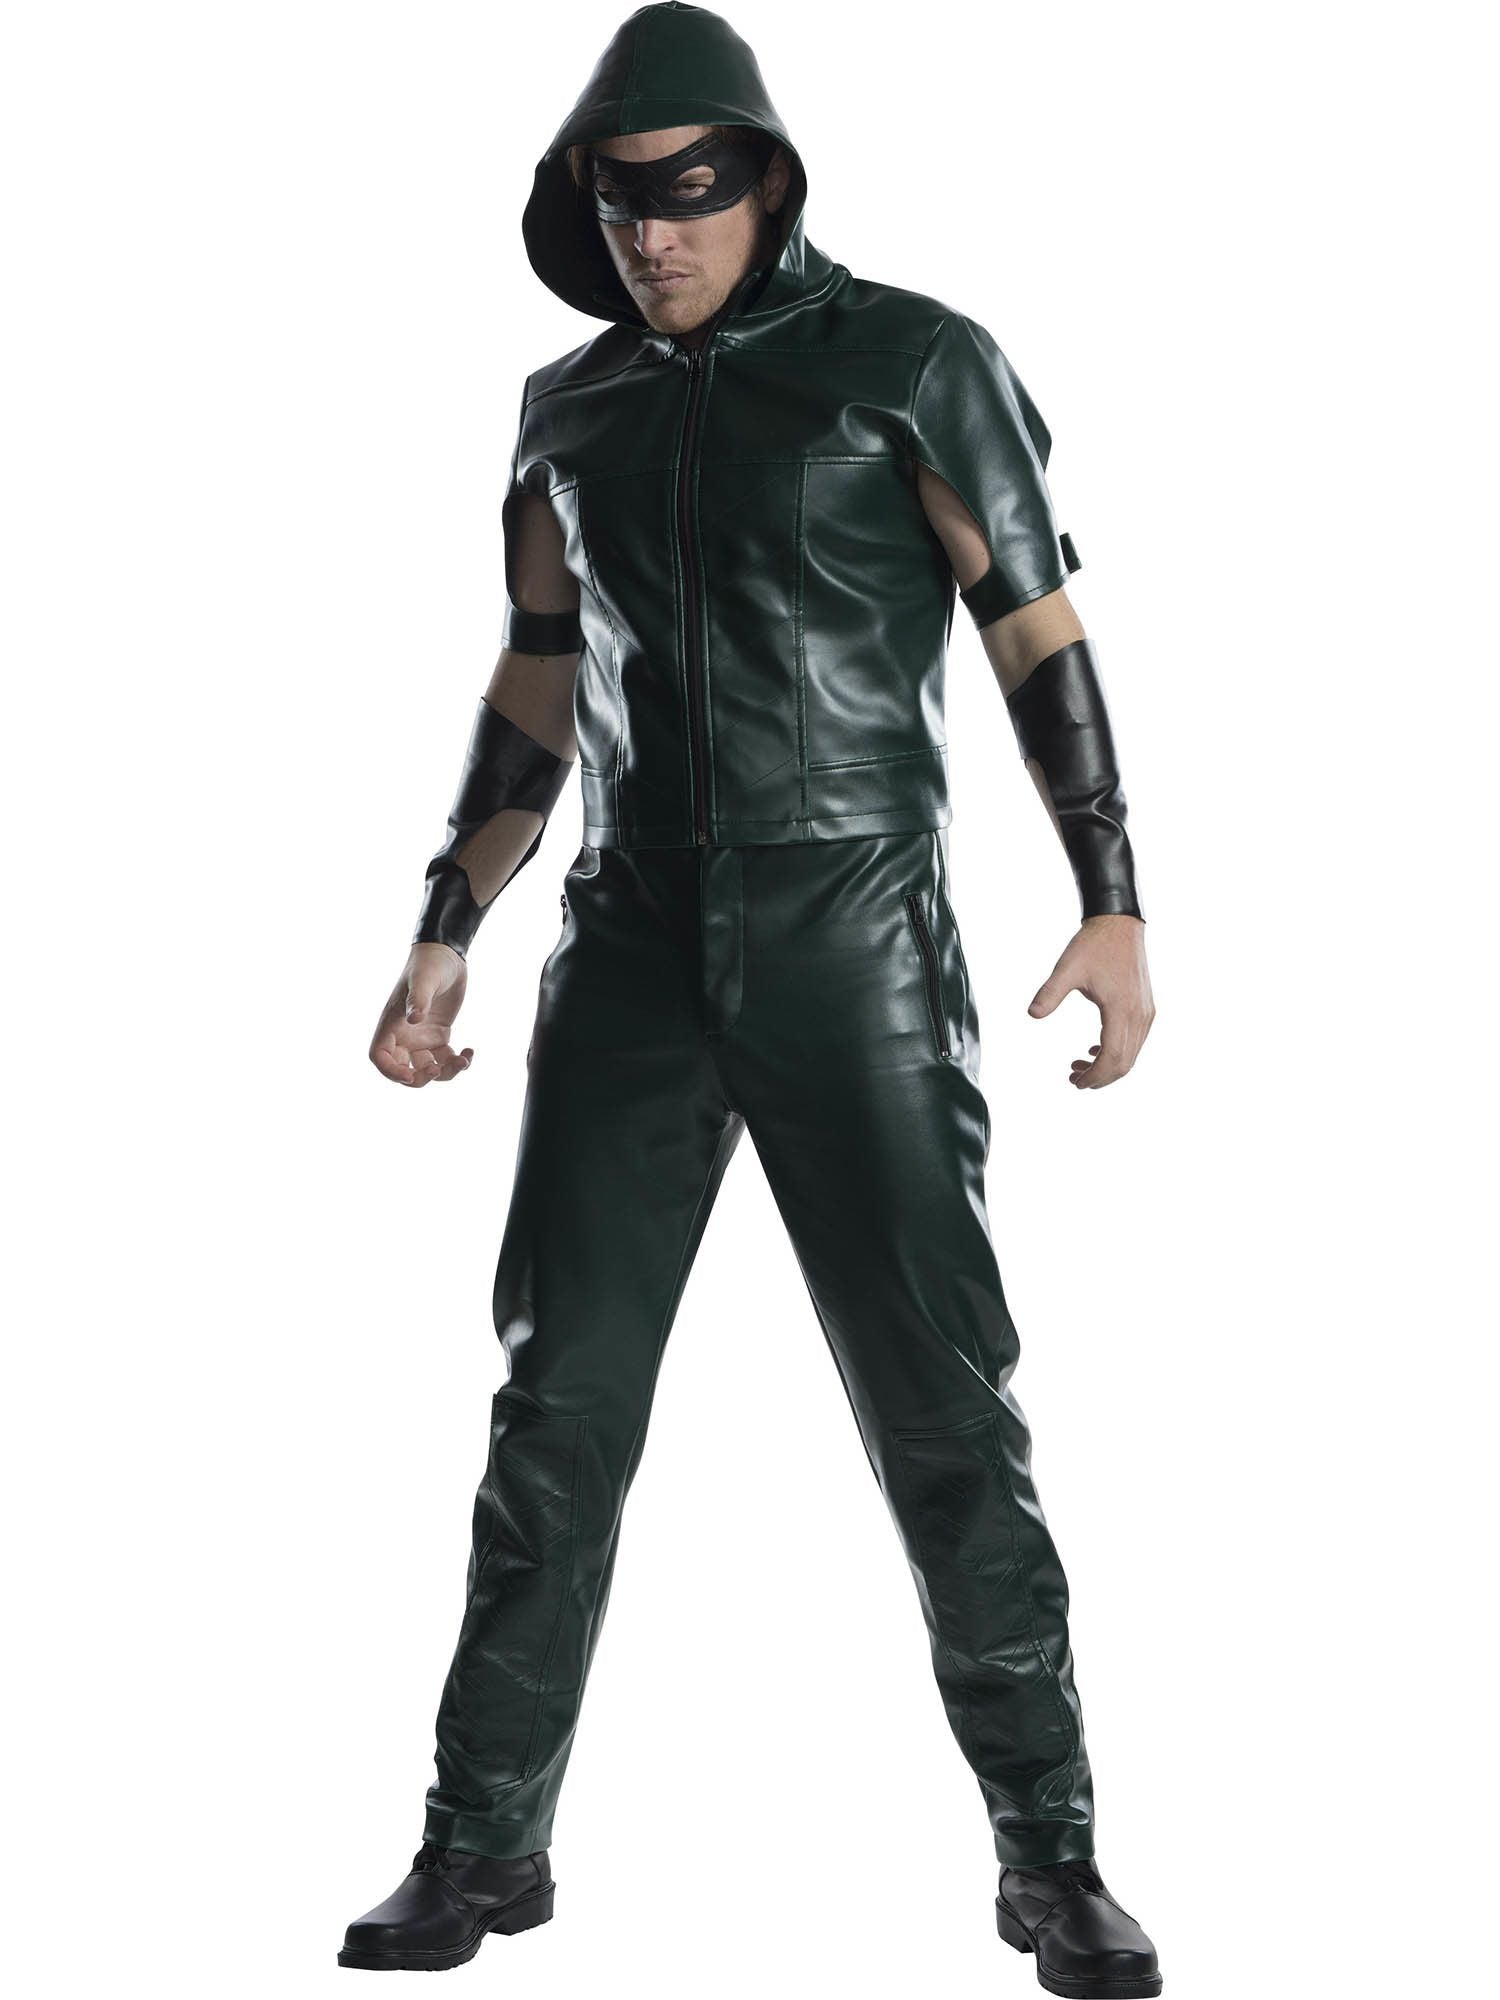 Men's DC Comics Arrow Costume - Deluxe - costumes.com